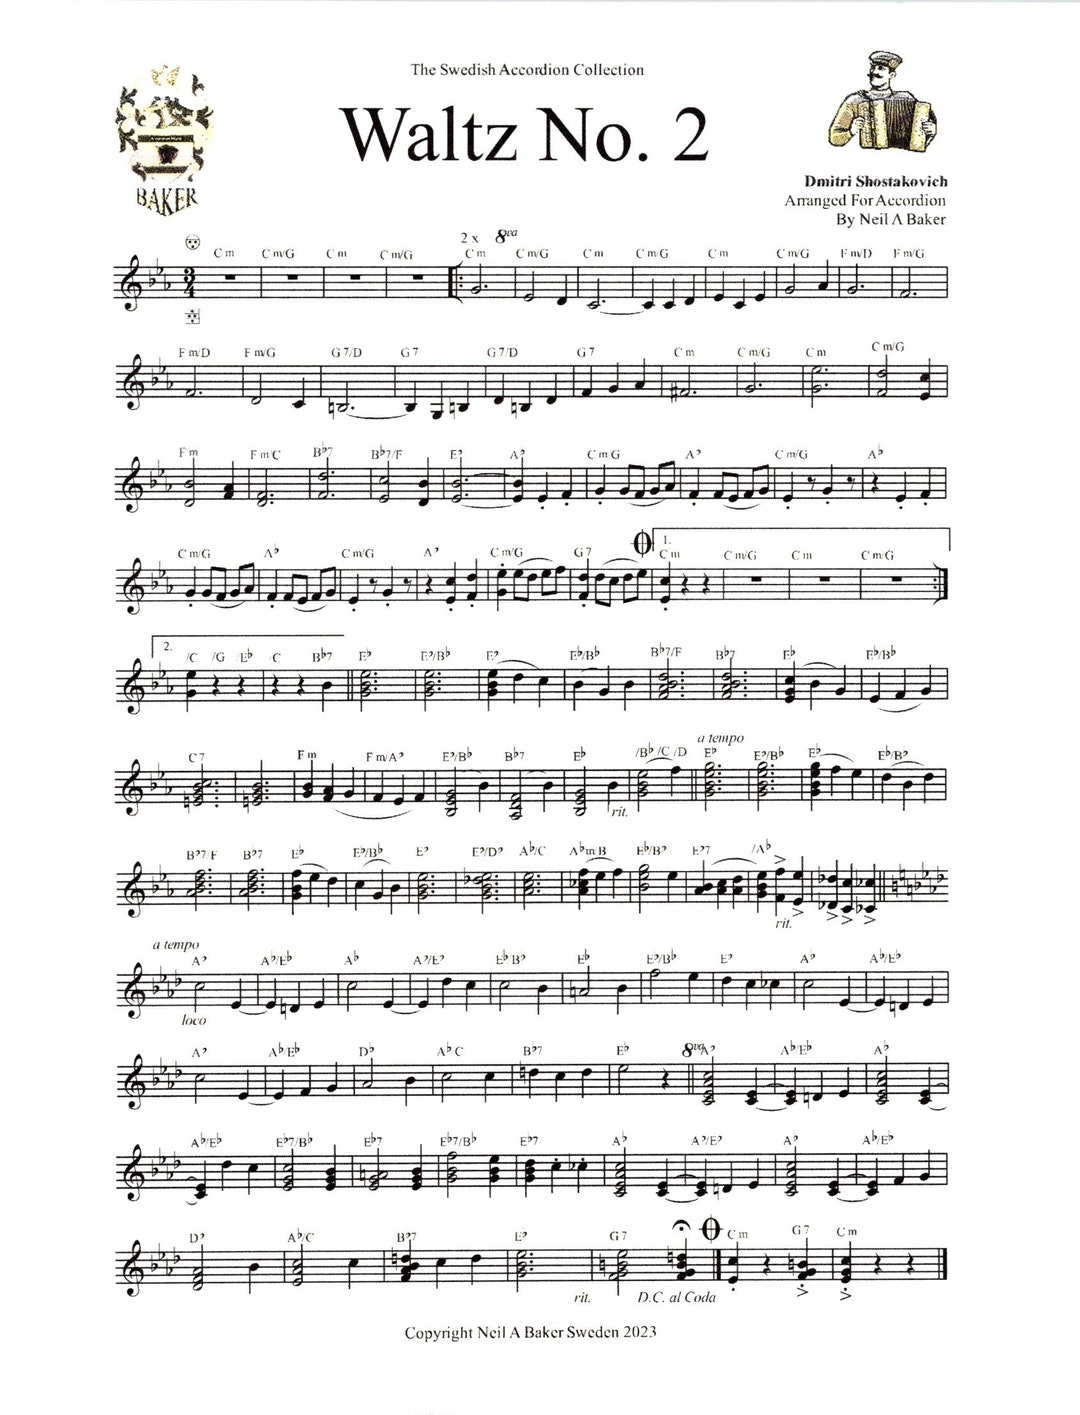 Waltz No. 2 by Shostakovich for Accordion Digital Sheet Music 